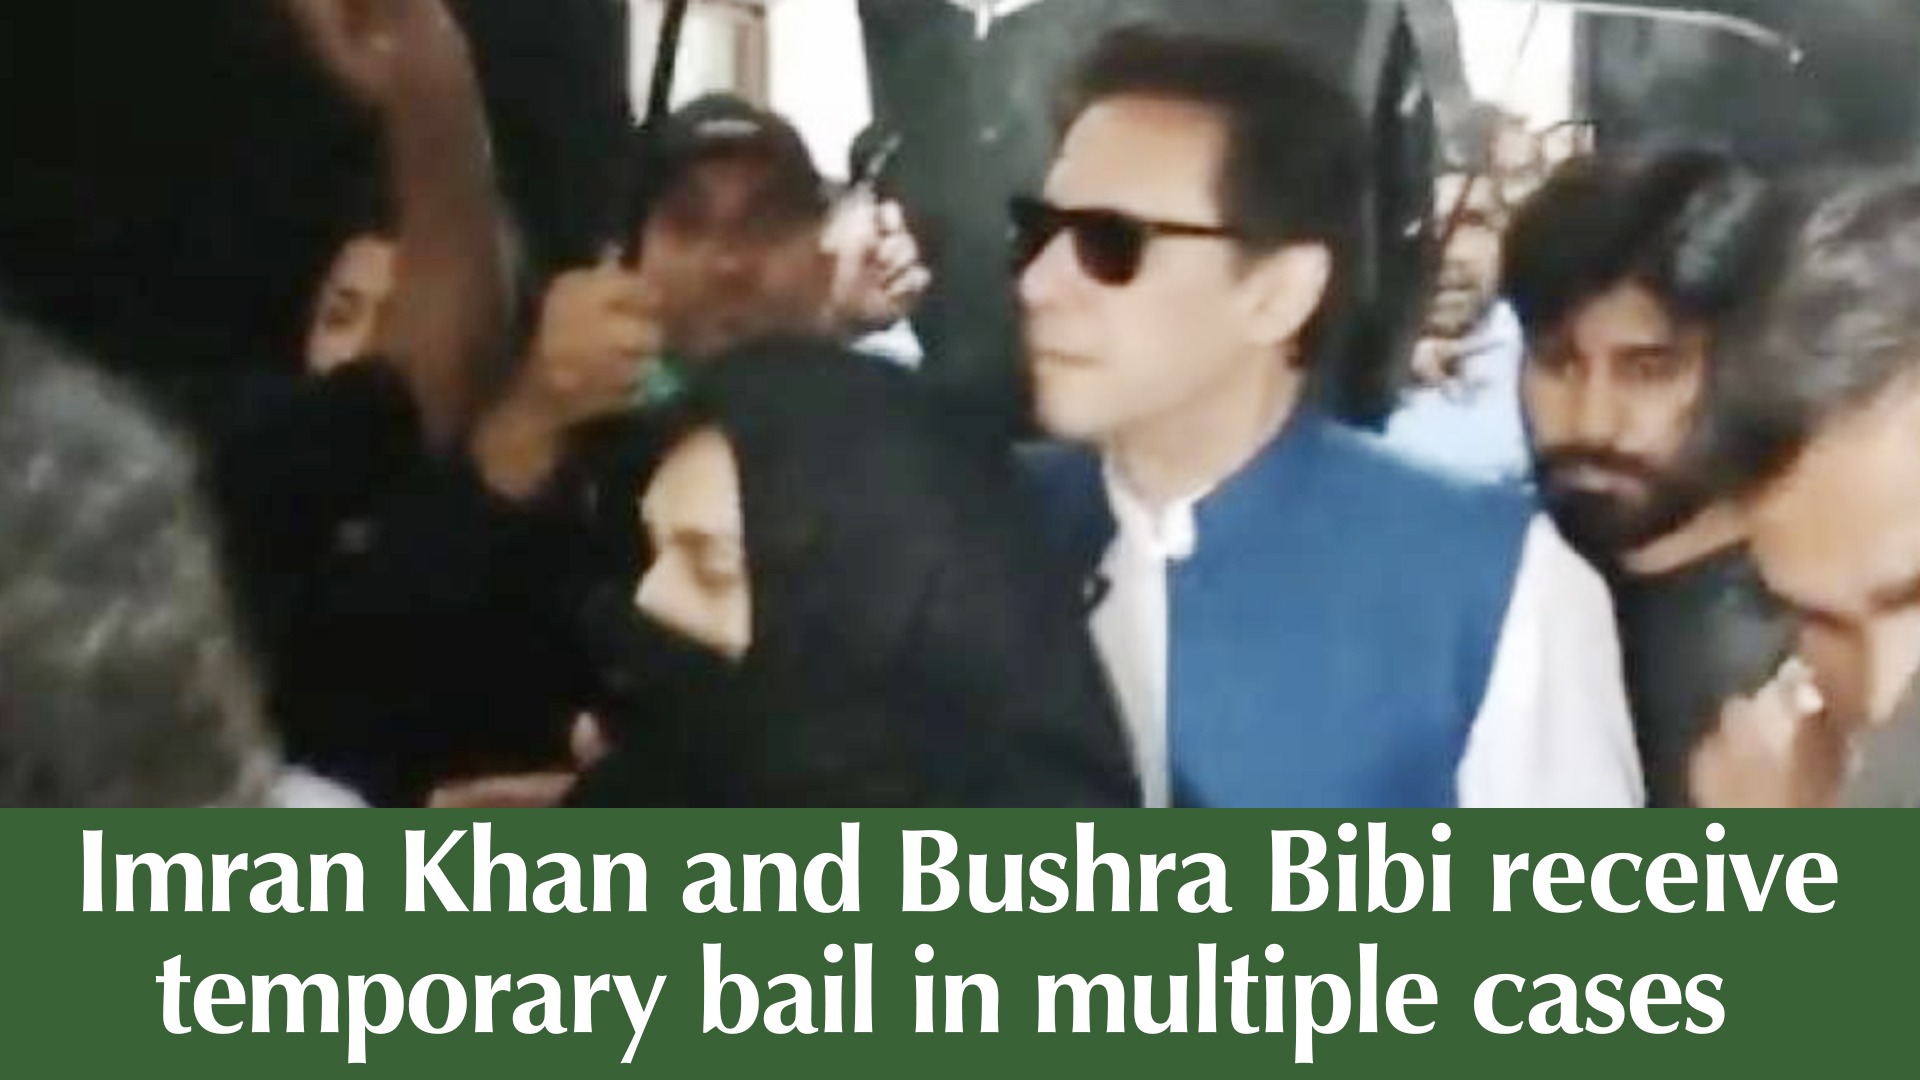 Imran Khan and Bushra Bibi receive temporary bail in multiple cases.